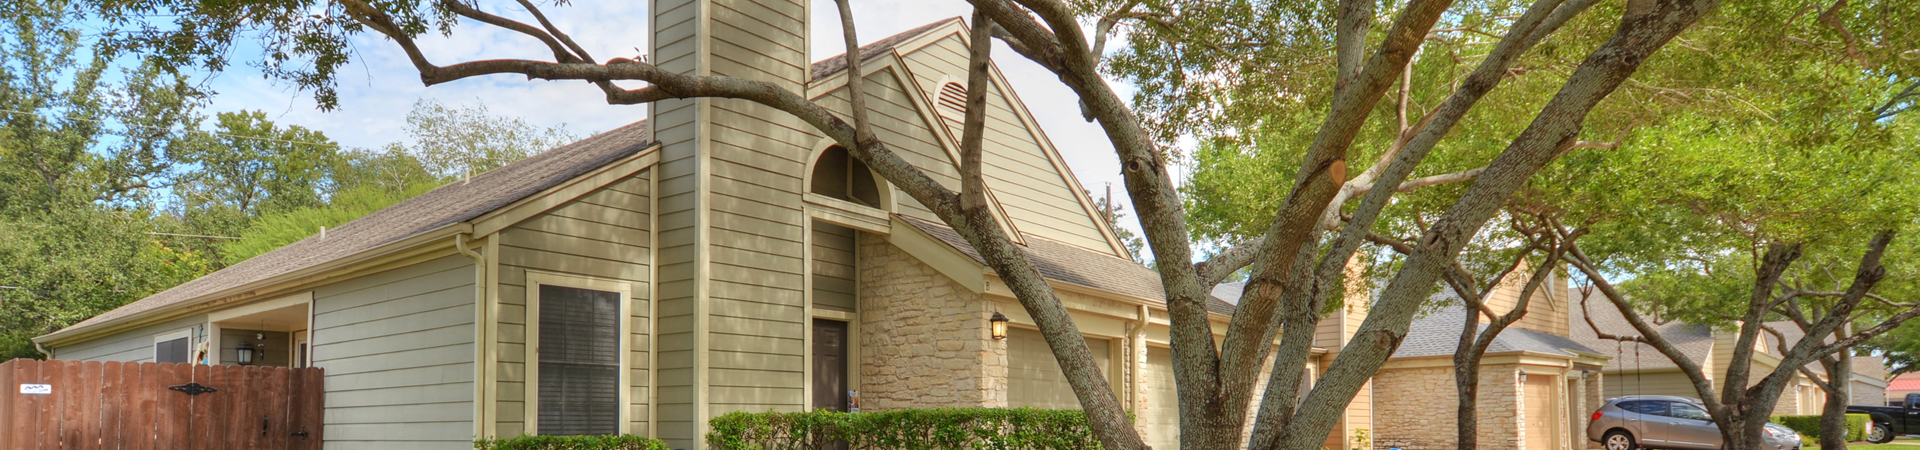 Property Details Amenities Ranchstone Garden Homes In Austin